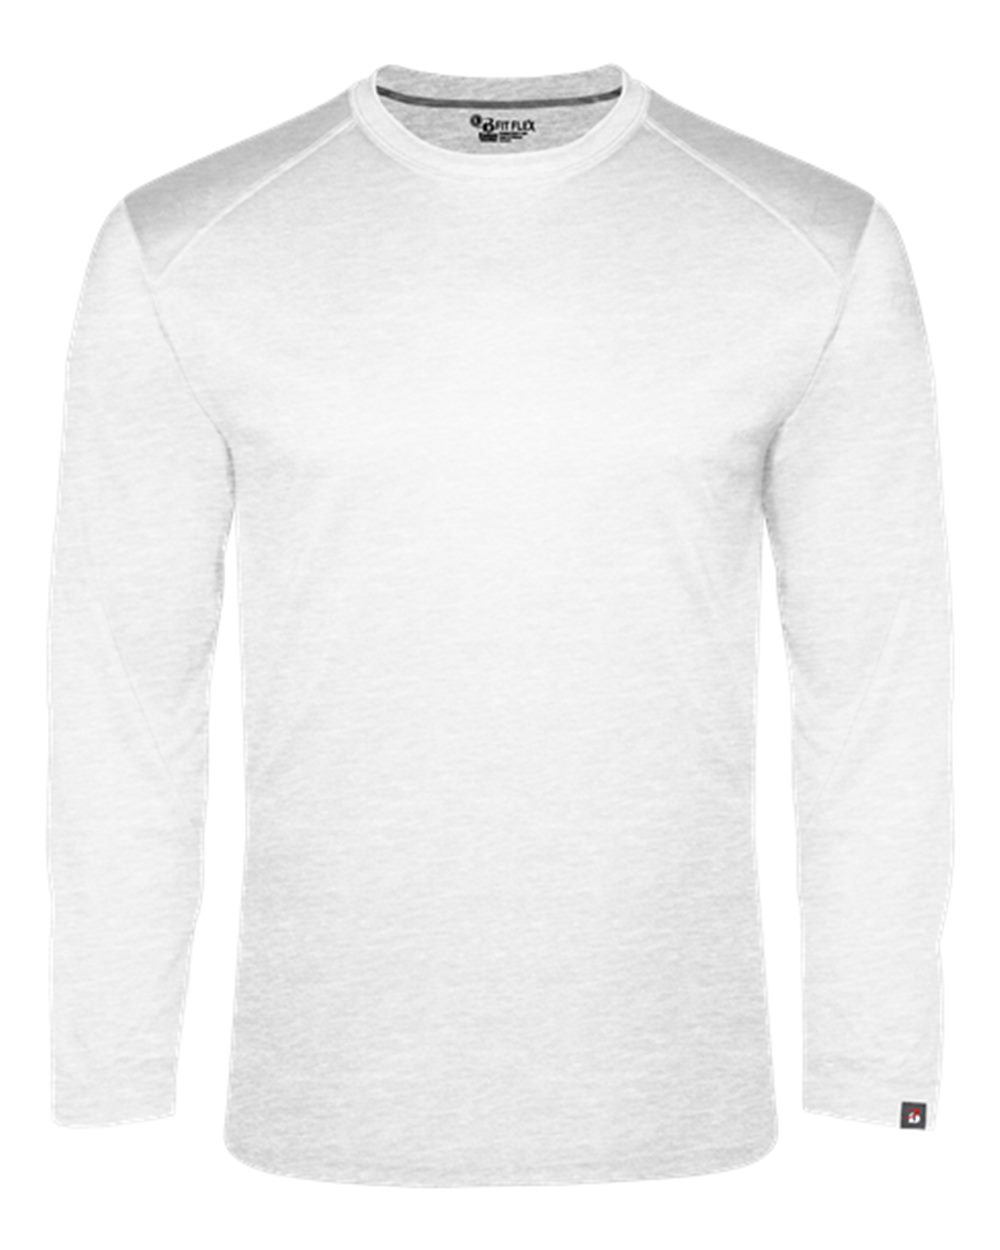 FitFlex Performance Long Sleeve T-Shirt-